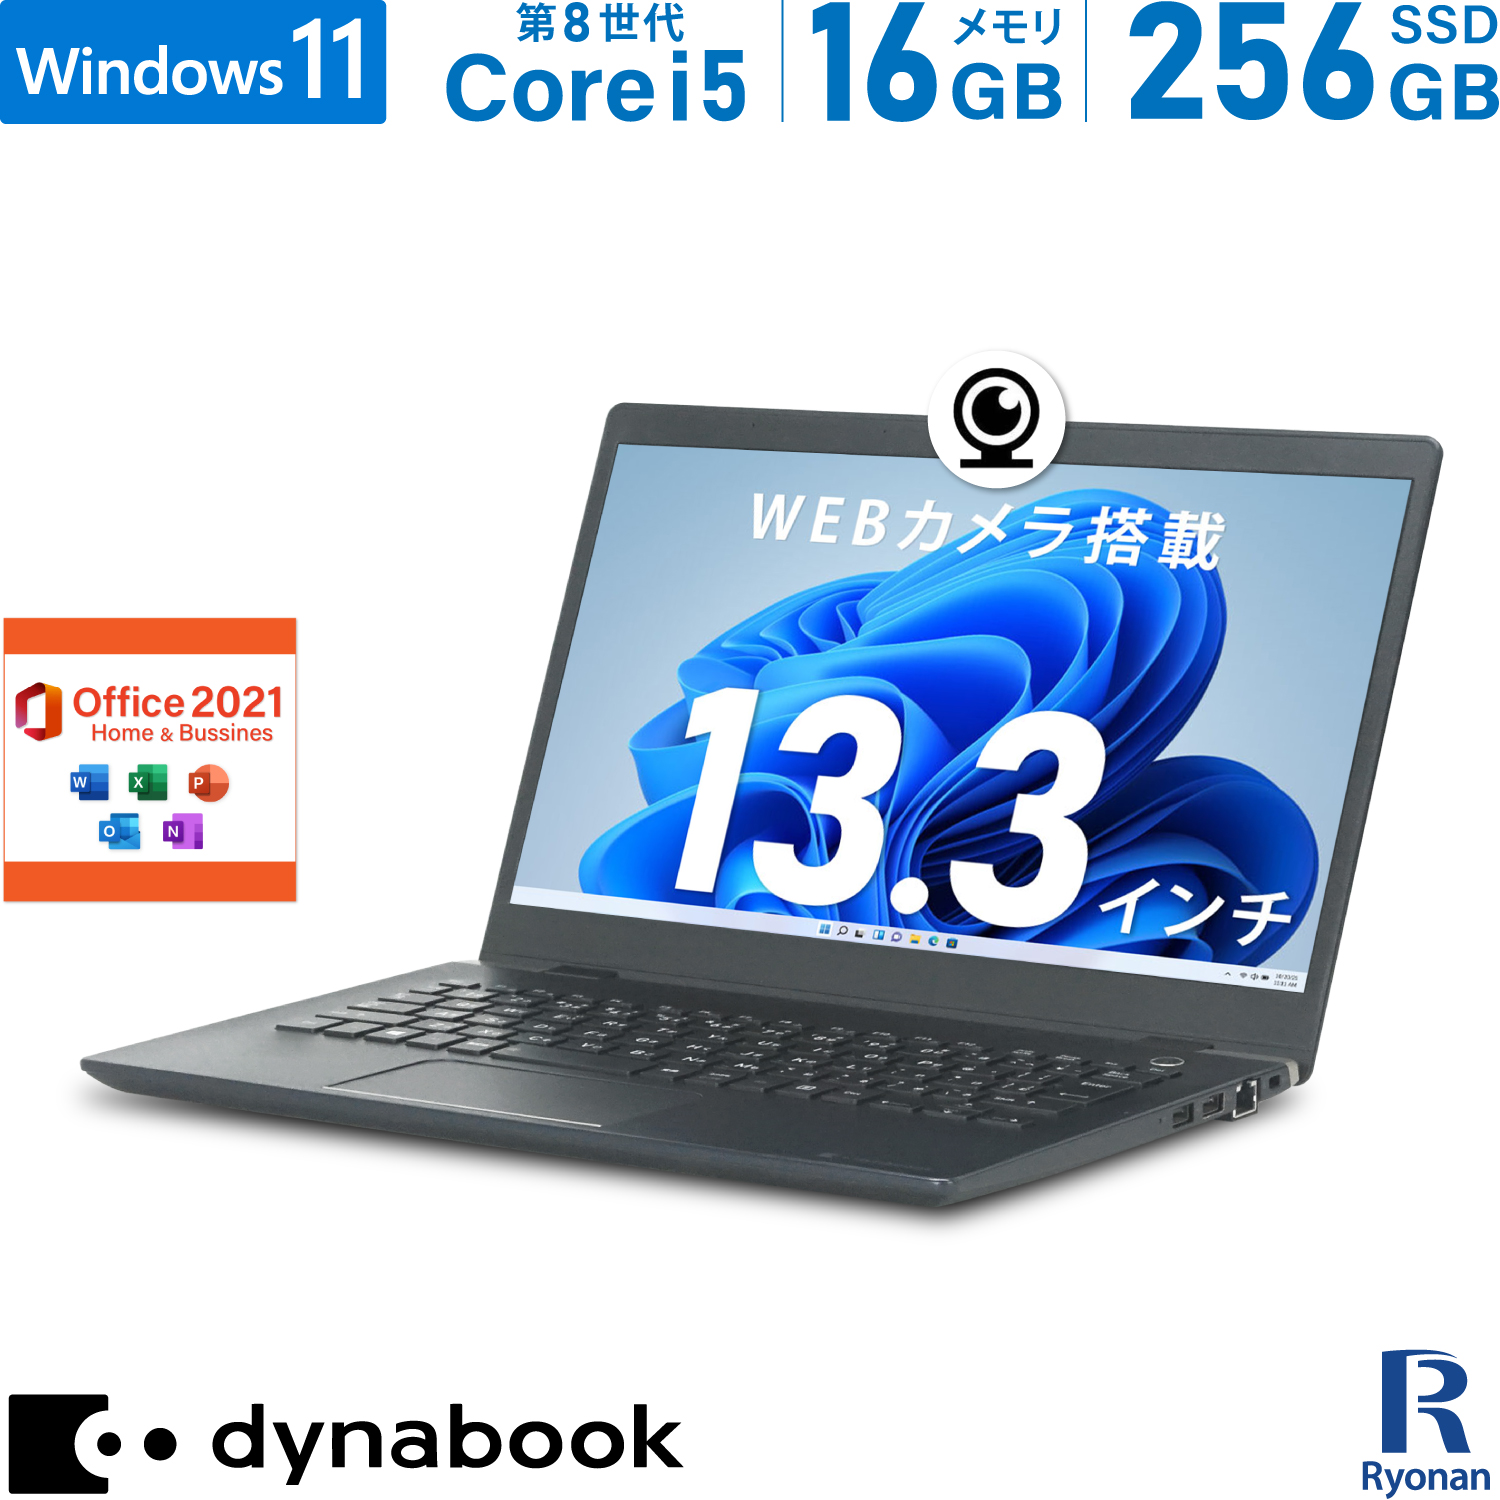 Dynabook G83 第8世代 Core i5 メモリ:16GB M.2 SSD:256GB ノートパソコン Microsoft Office 2021搭載 13.3インチ USB3.0 HDMI 無線LAN パソコン 中古パソコン 中古 Windows 11 搭載 Windows 10